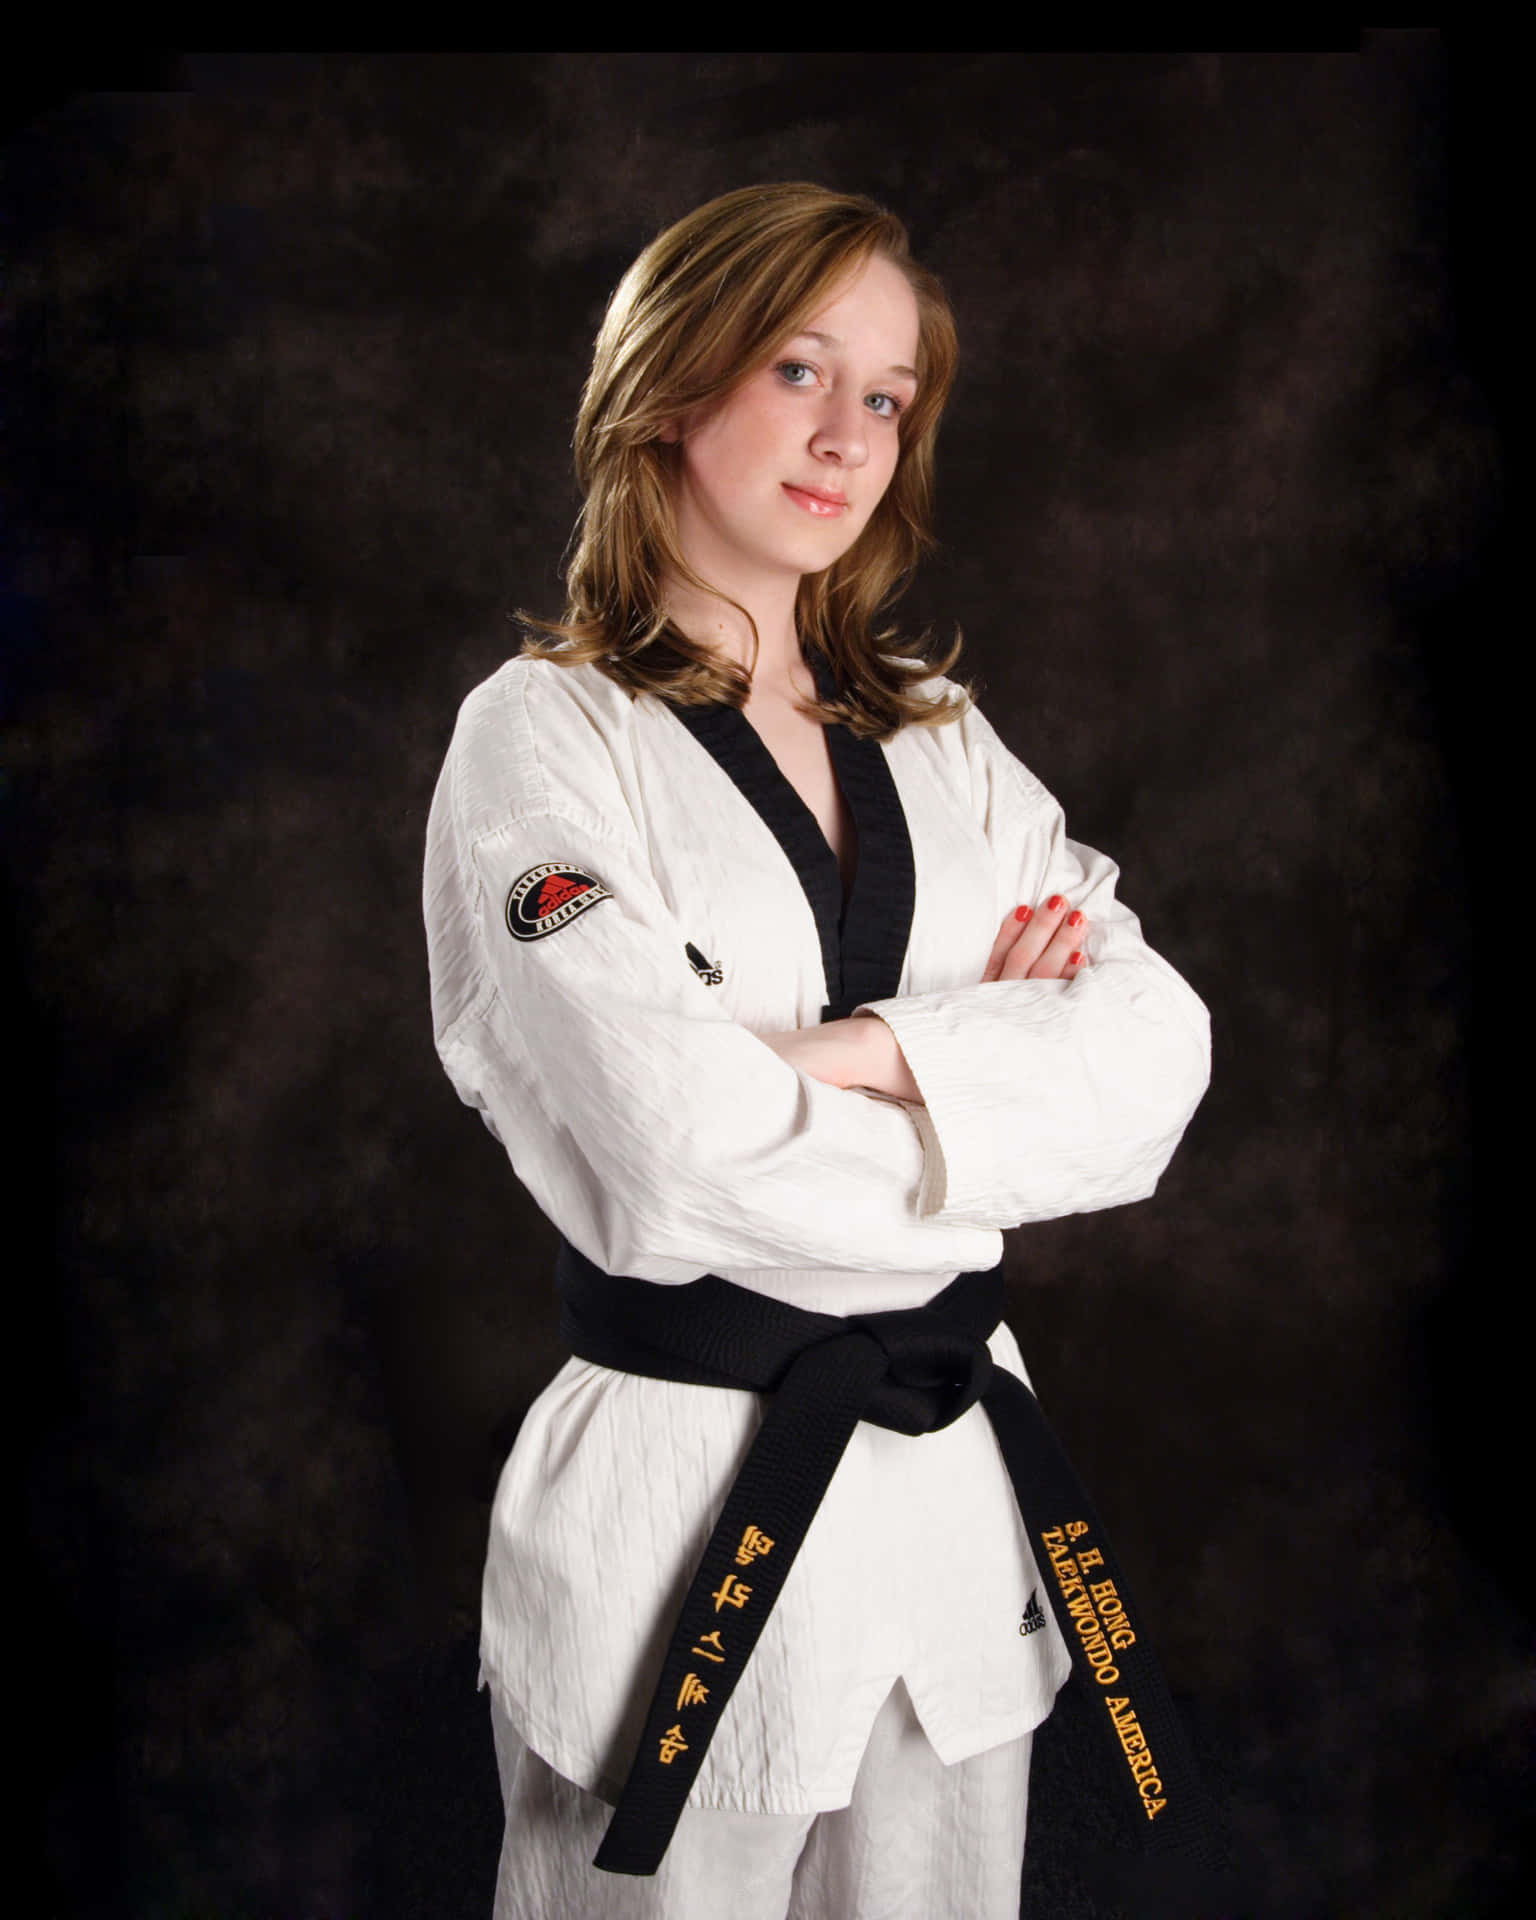 Karate student wearing traditional martial arts uniform Wallpaper